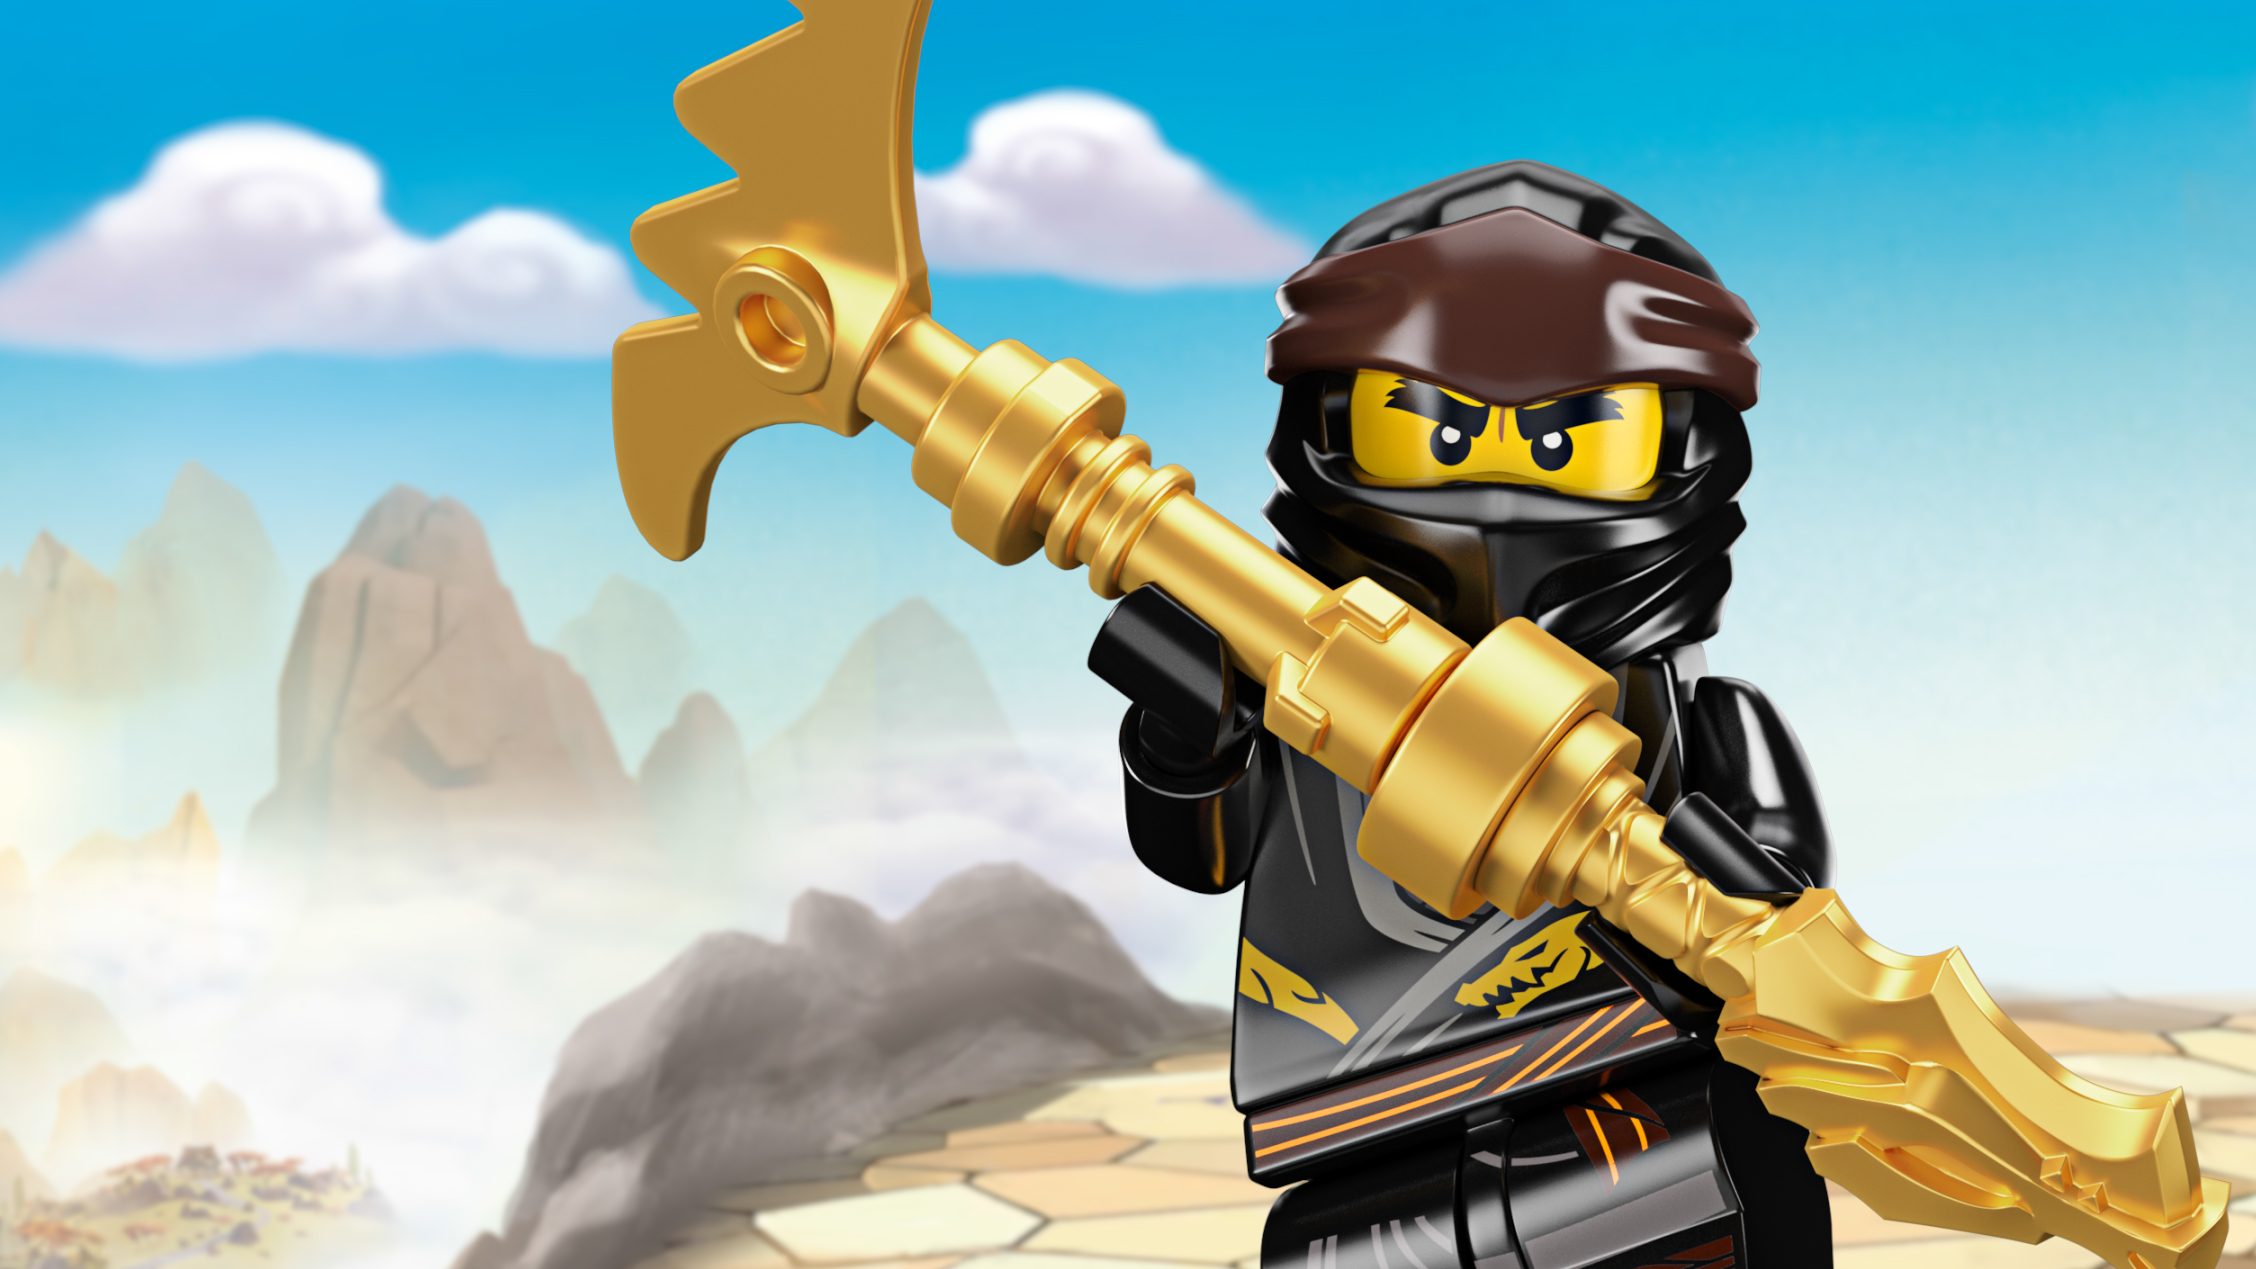 LEGO Ninjago Movie Minifigure - Cole with Blue Ninja Armor and Hair - wide 10